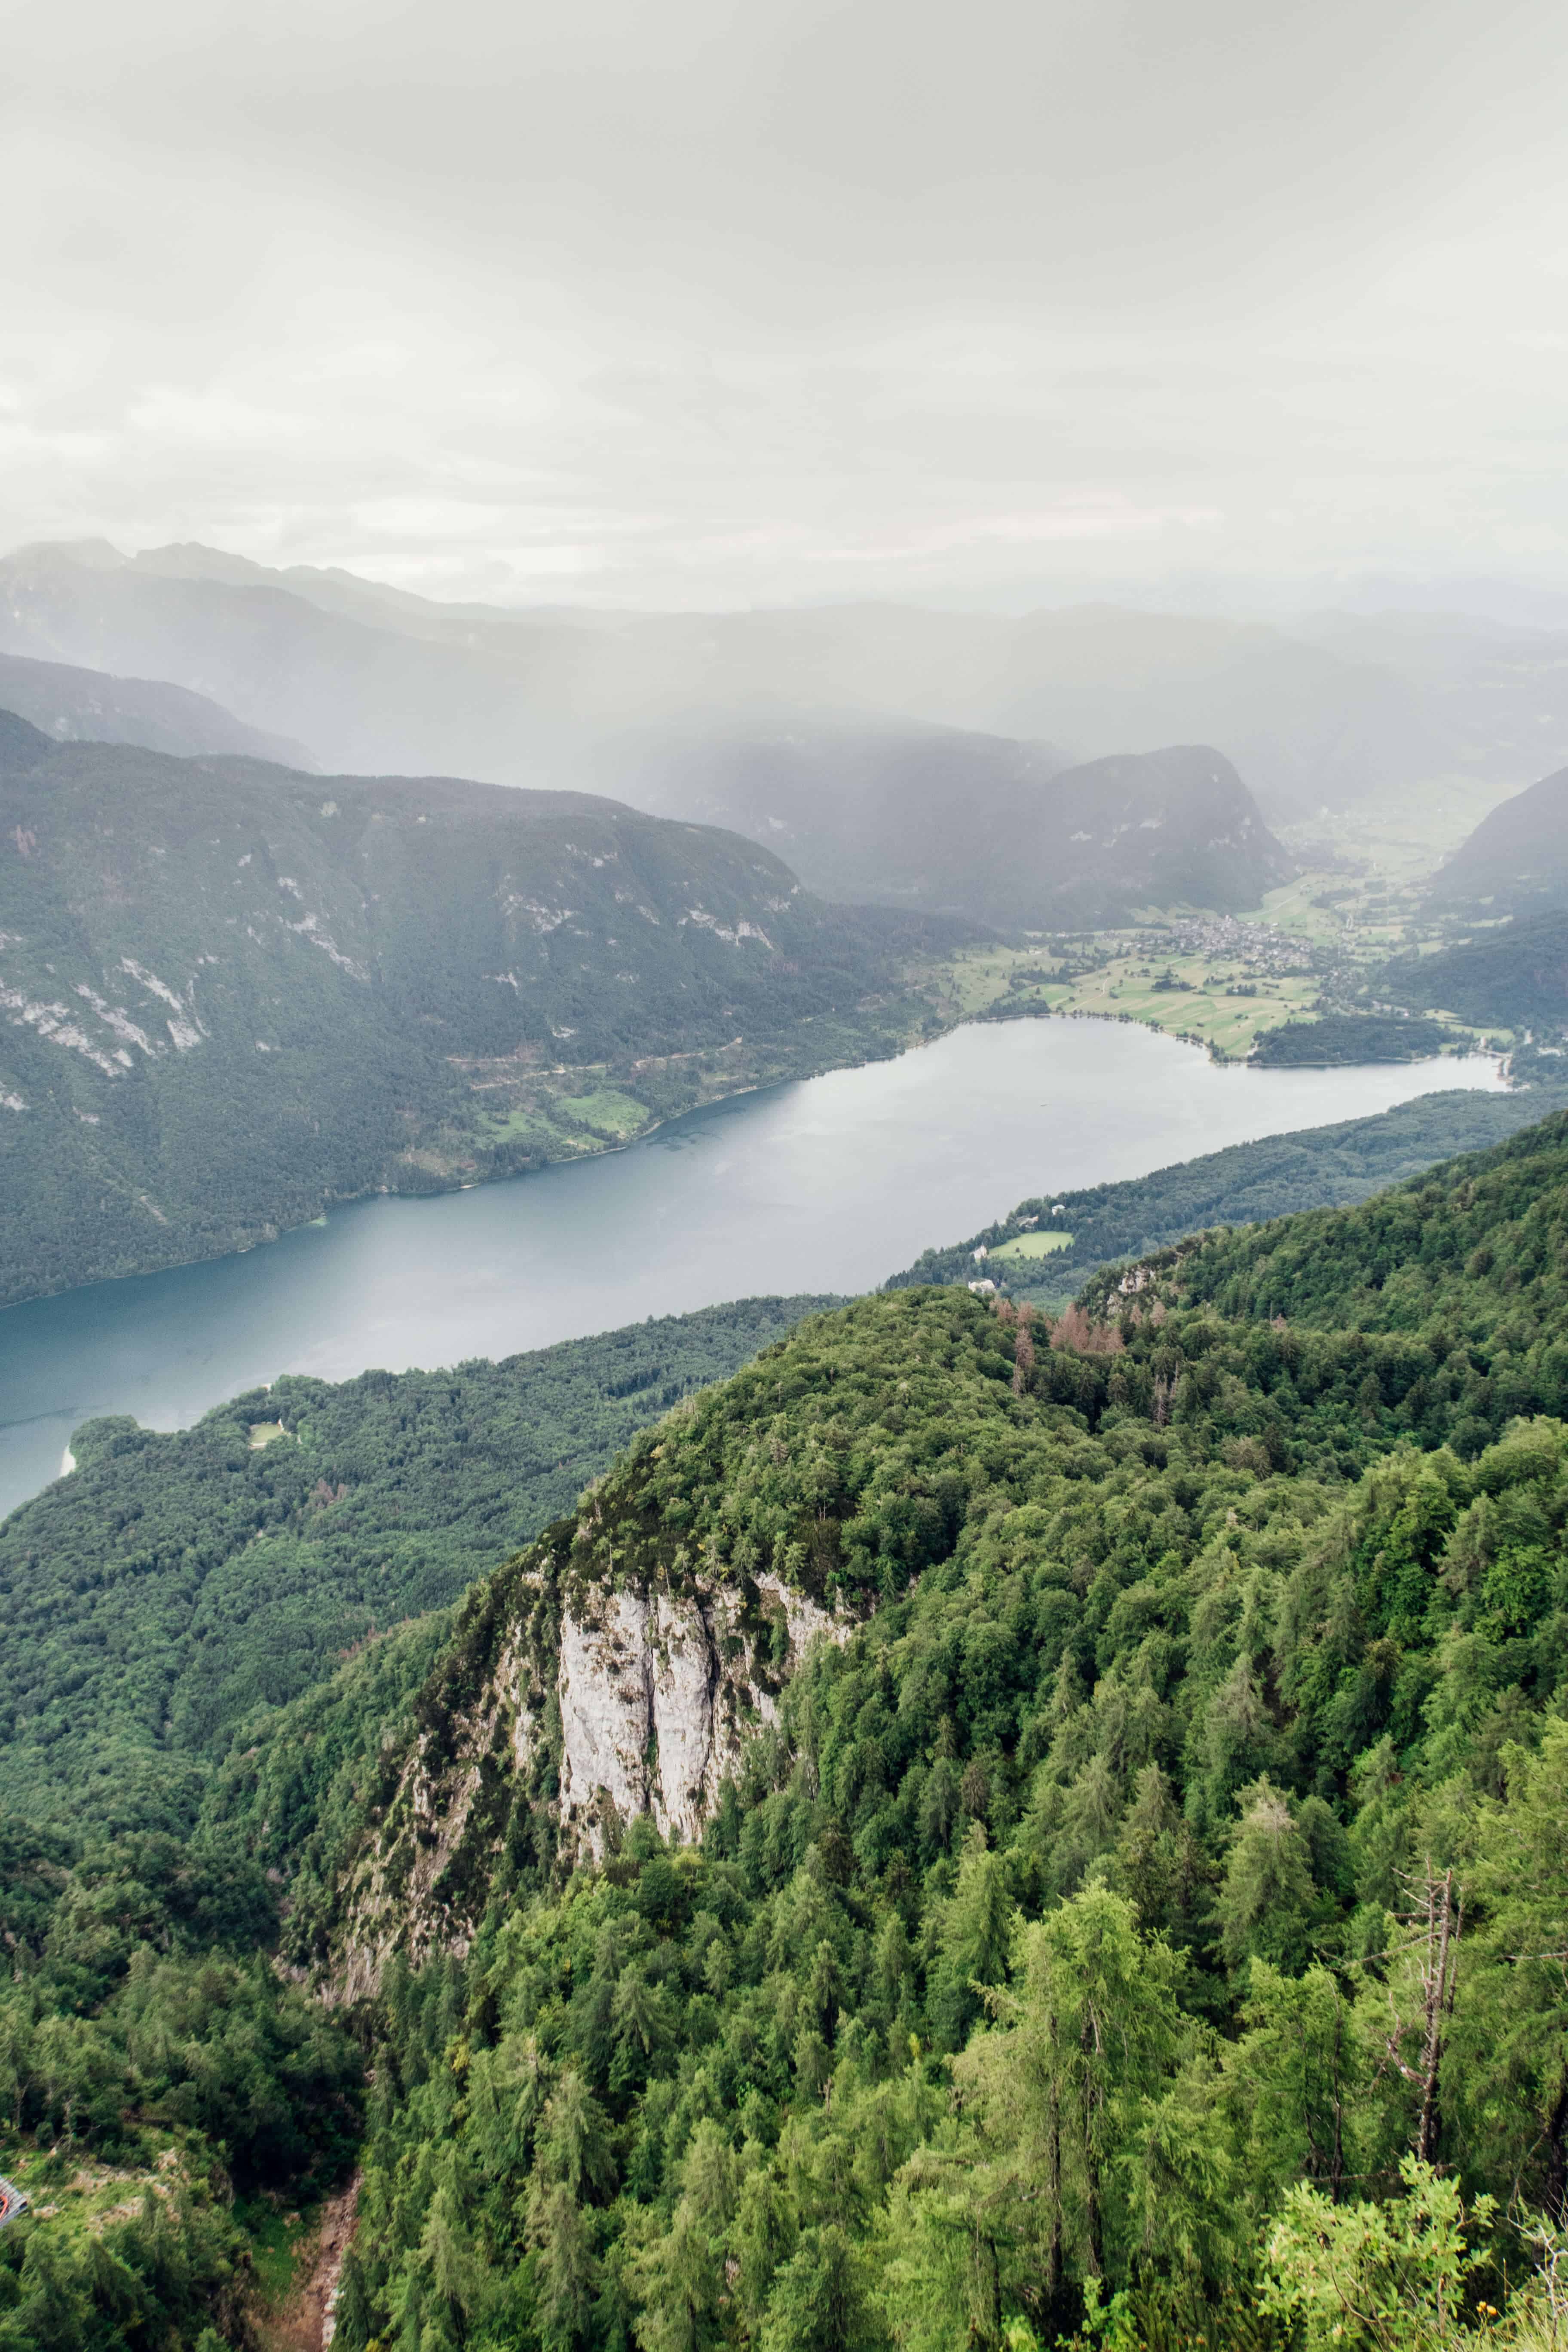 The Ultimate Guide to Lake Bohinj Slovenia | View from the top of Vogel Mountain | The Republic of Rose | #Slovenia #Bohinj #LakeBohinj #Europe #Travel